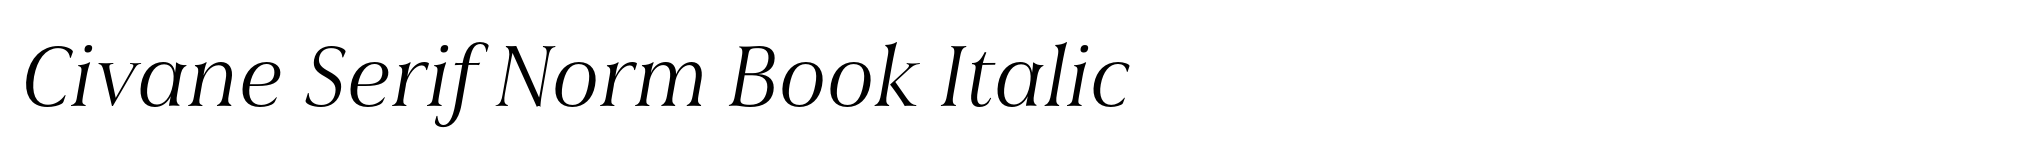 Civane Serif Norm Book Italic image